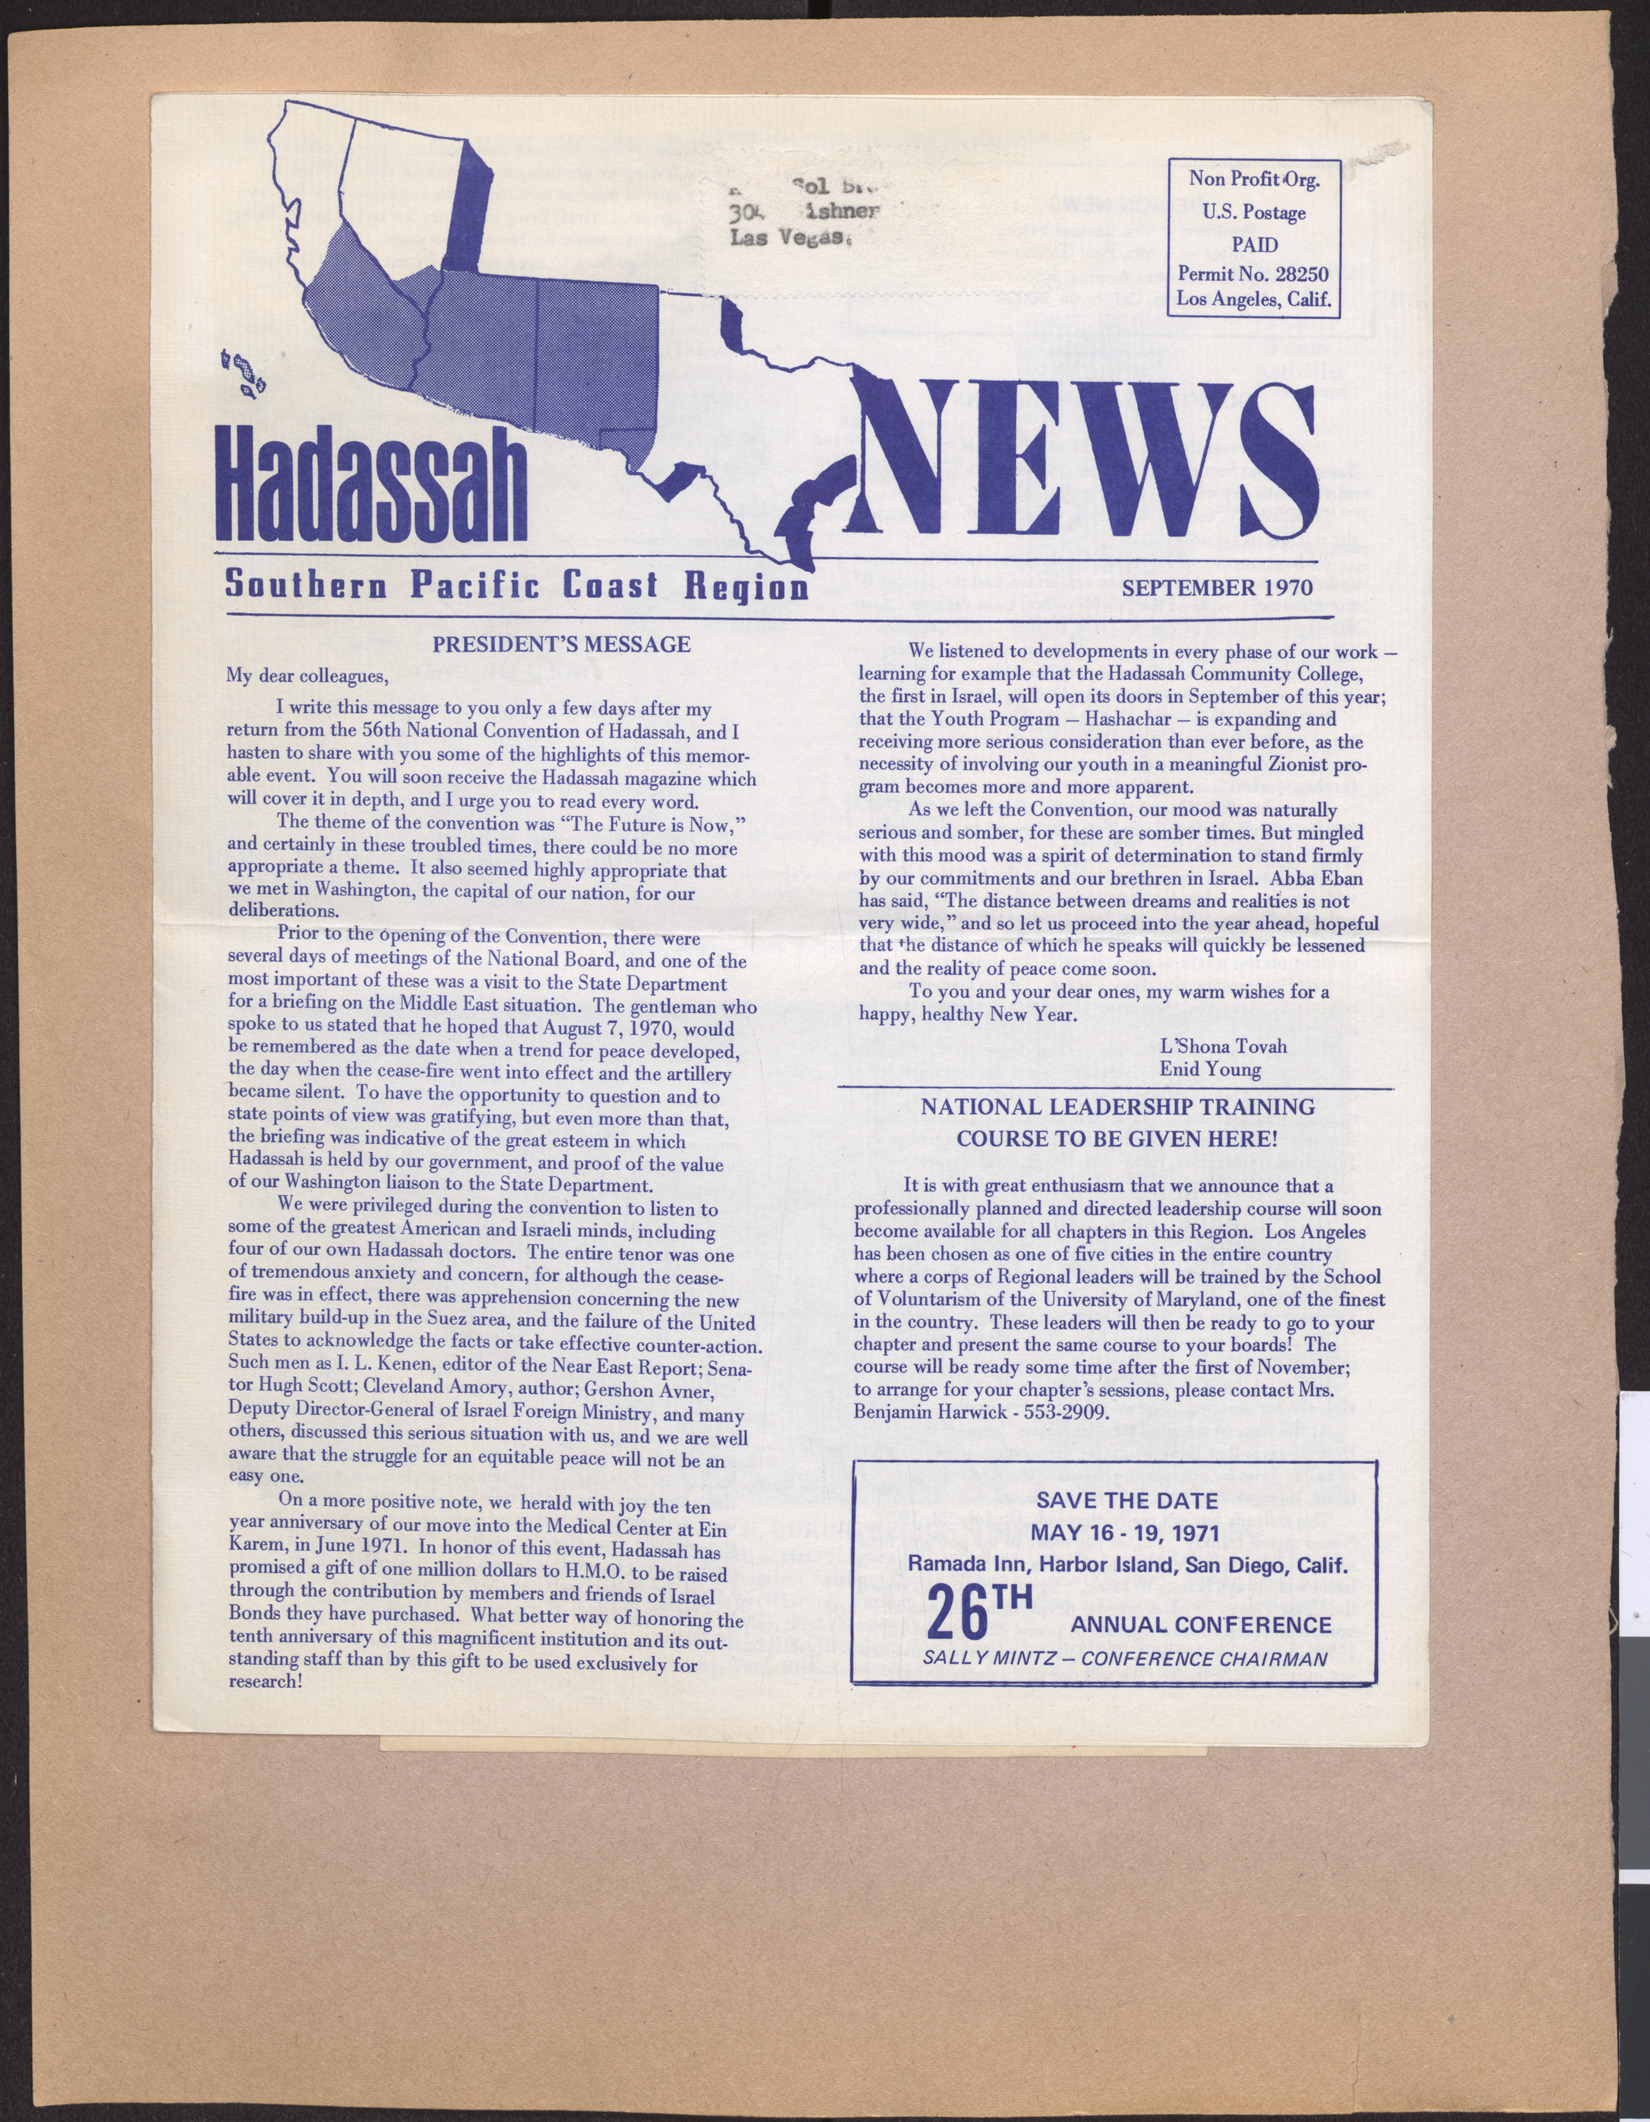 Hadassah news, Southern Pacific Coast Region, September 1970, page 1